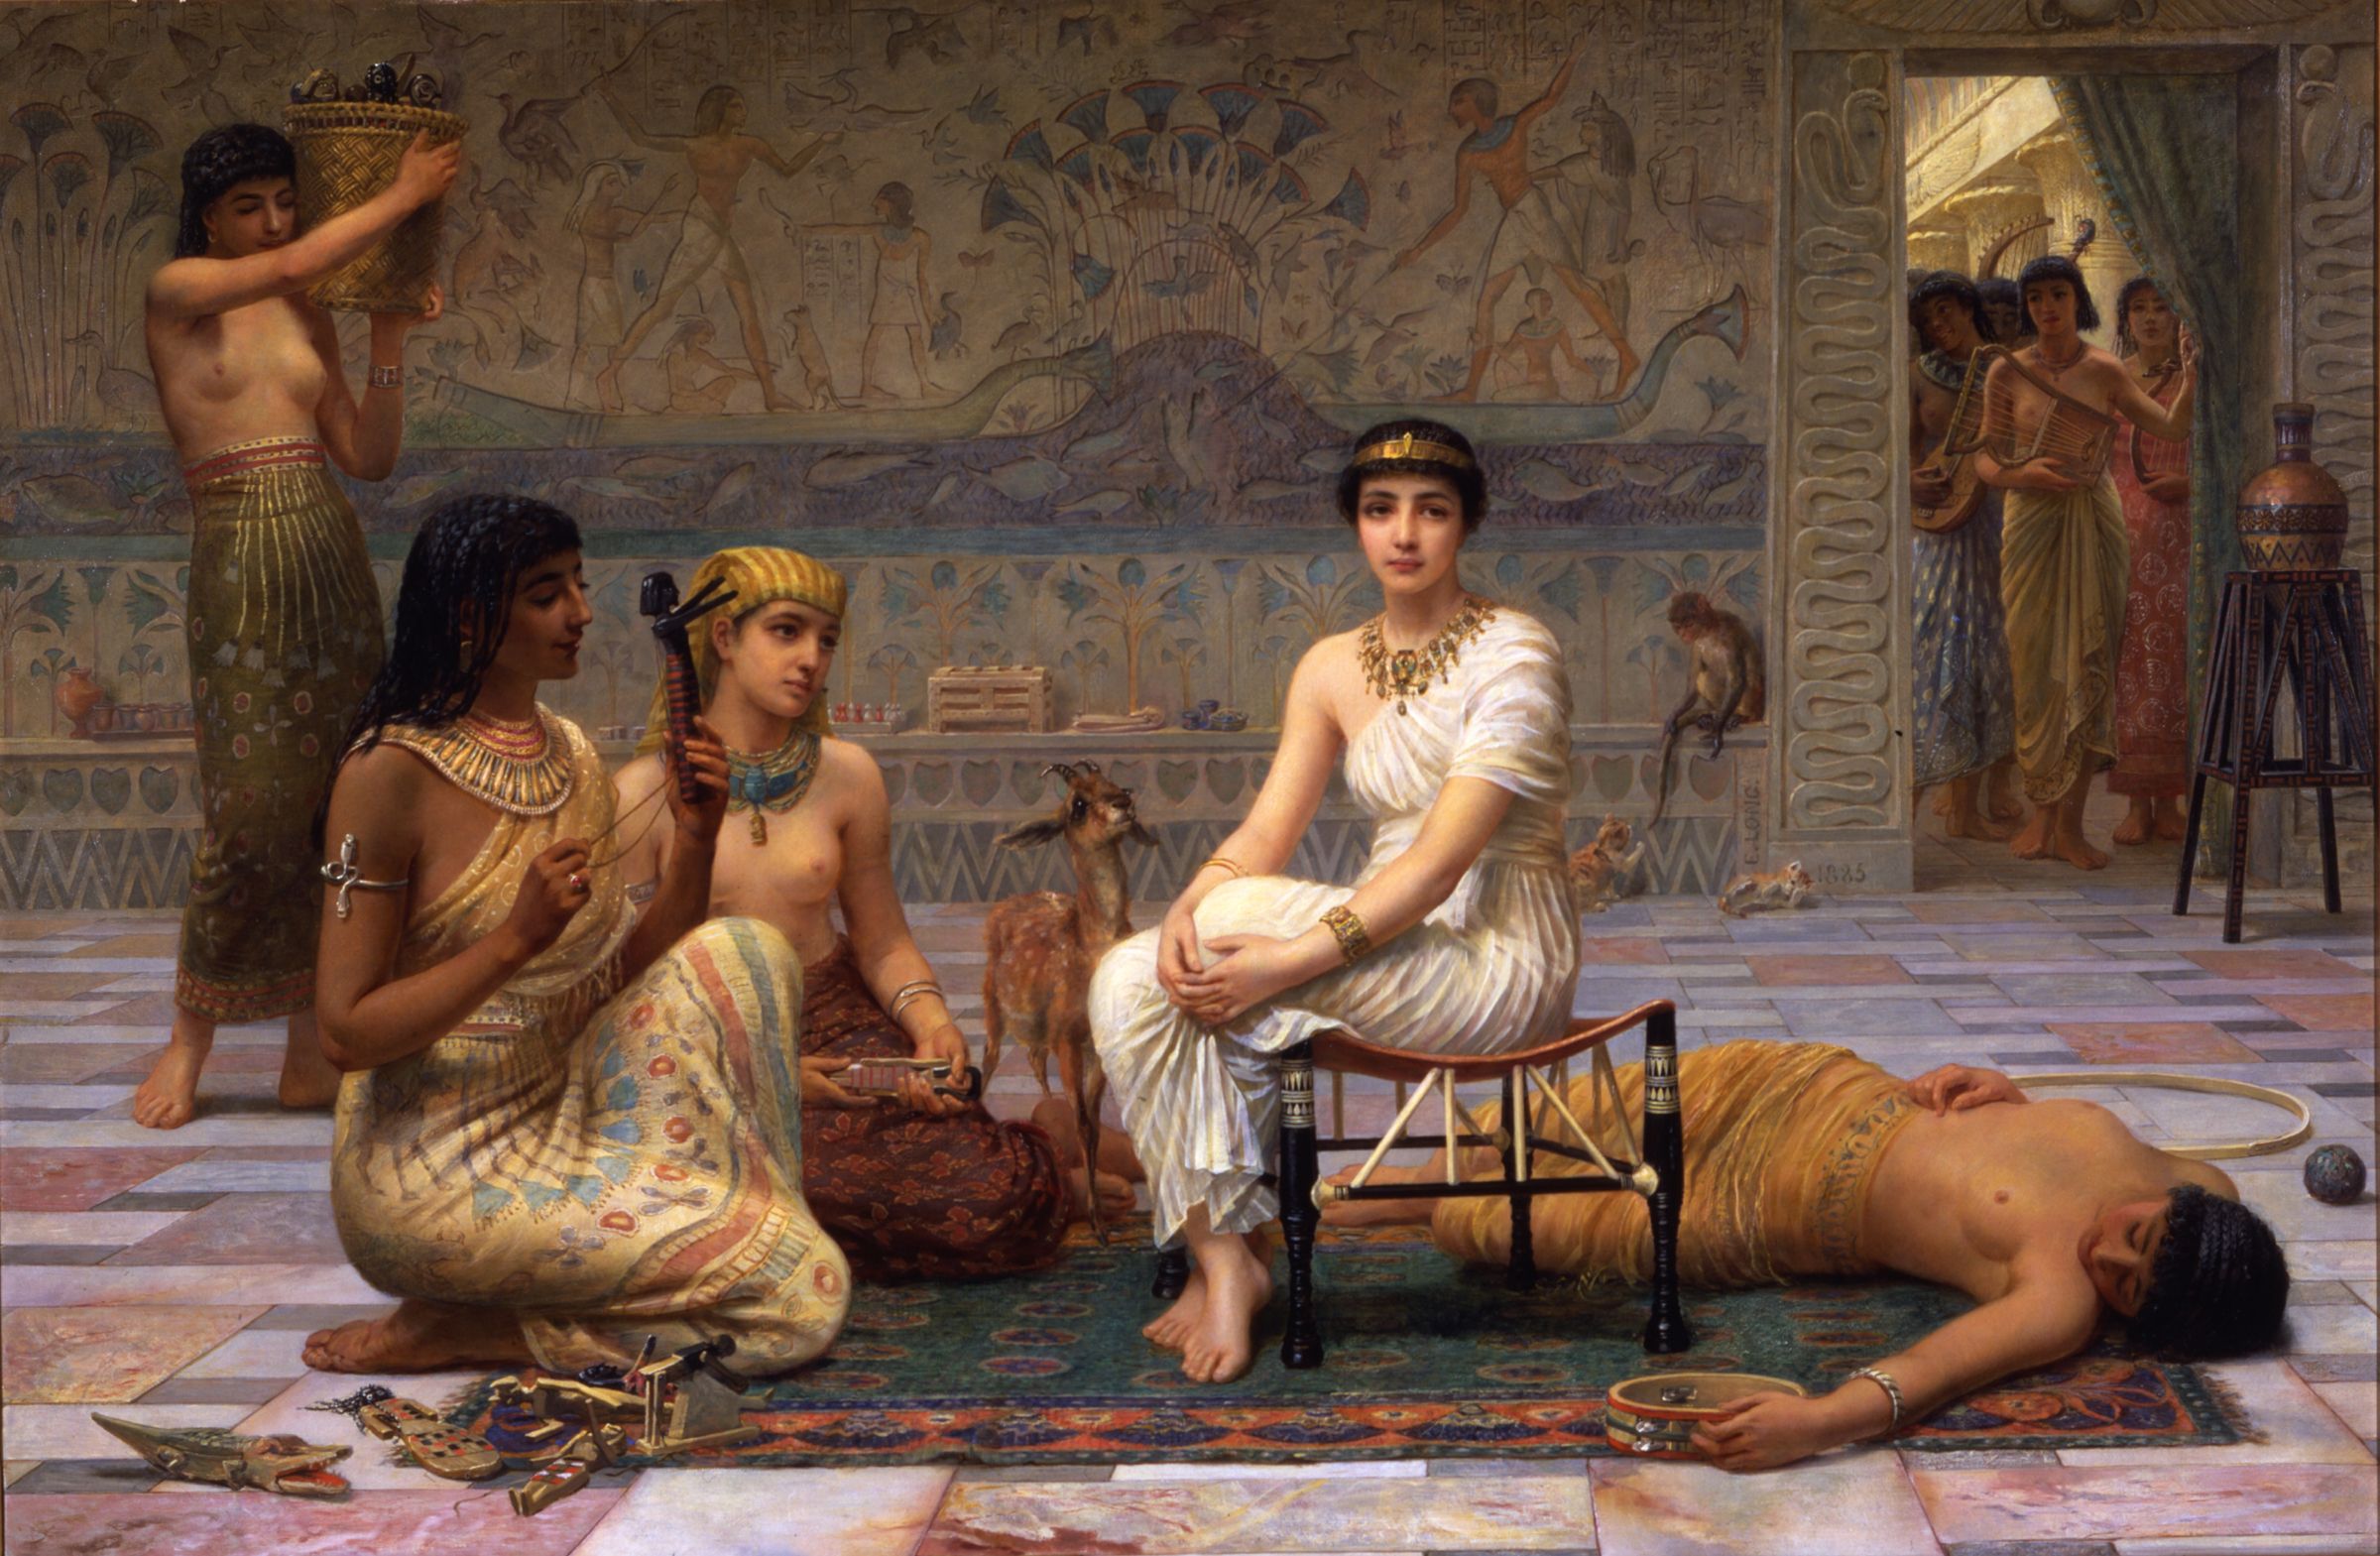 Woman Ancient Egyptian Alchemist Enjoying Herself